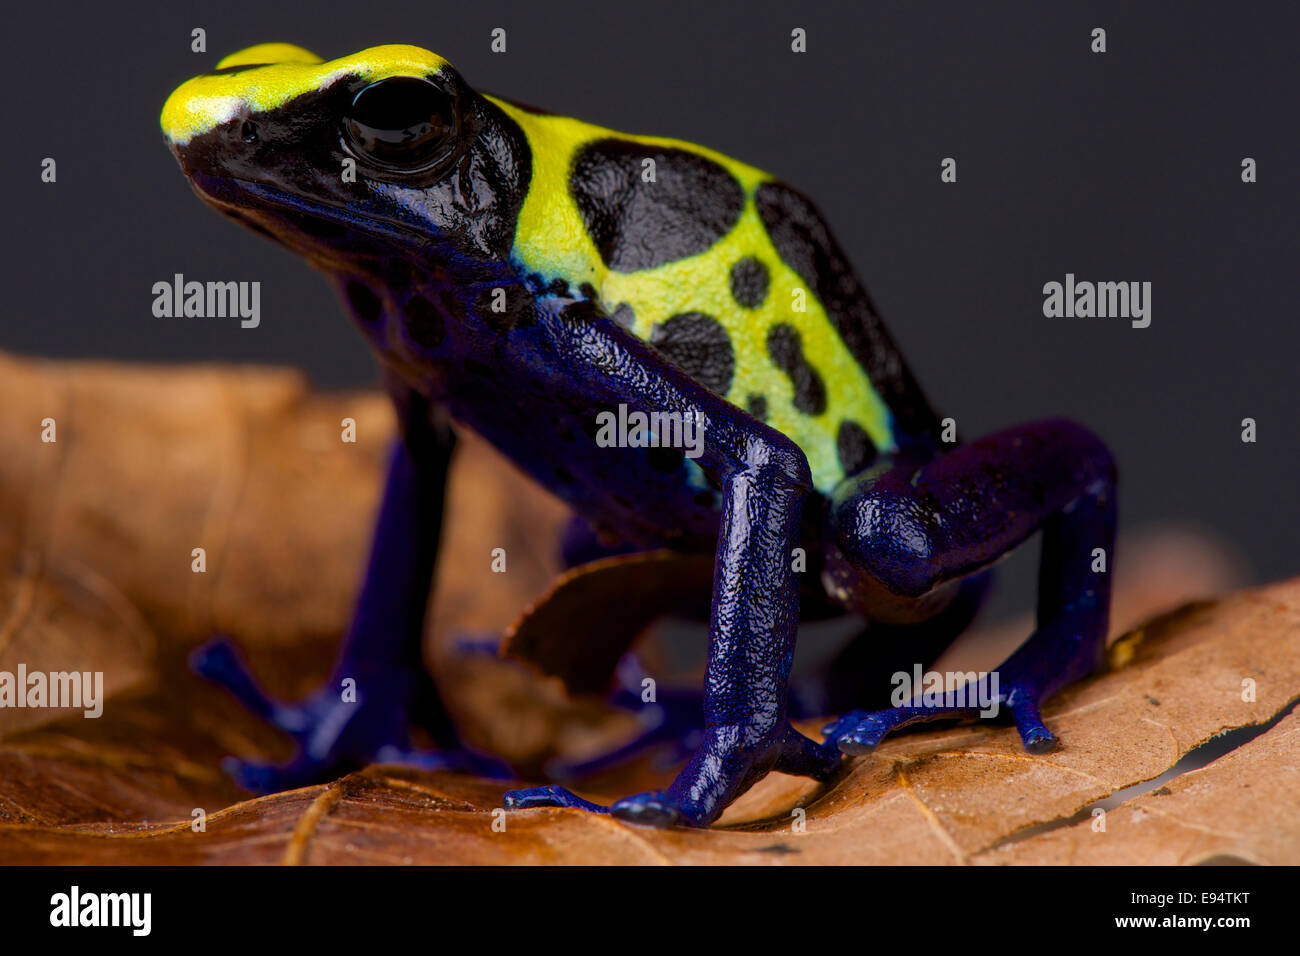 Dart frog / Dendrobates tinctorius Stock Photo